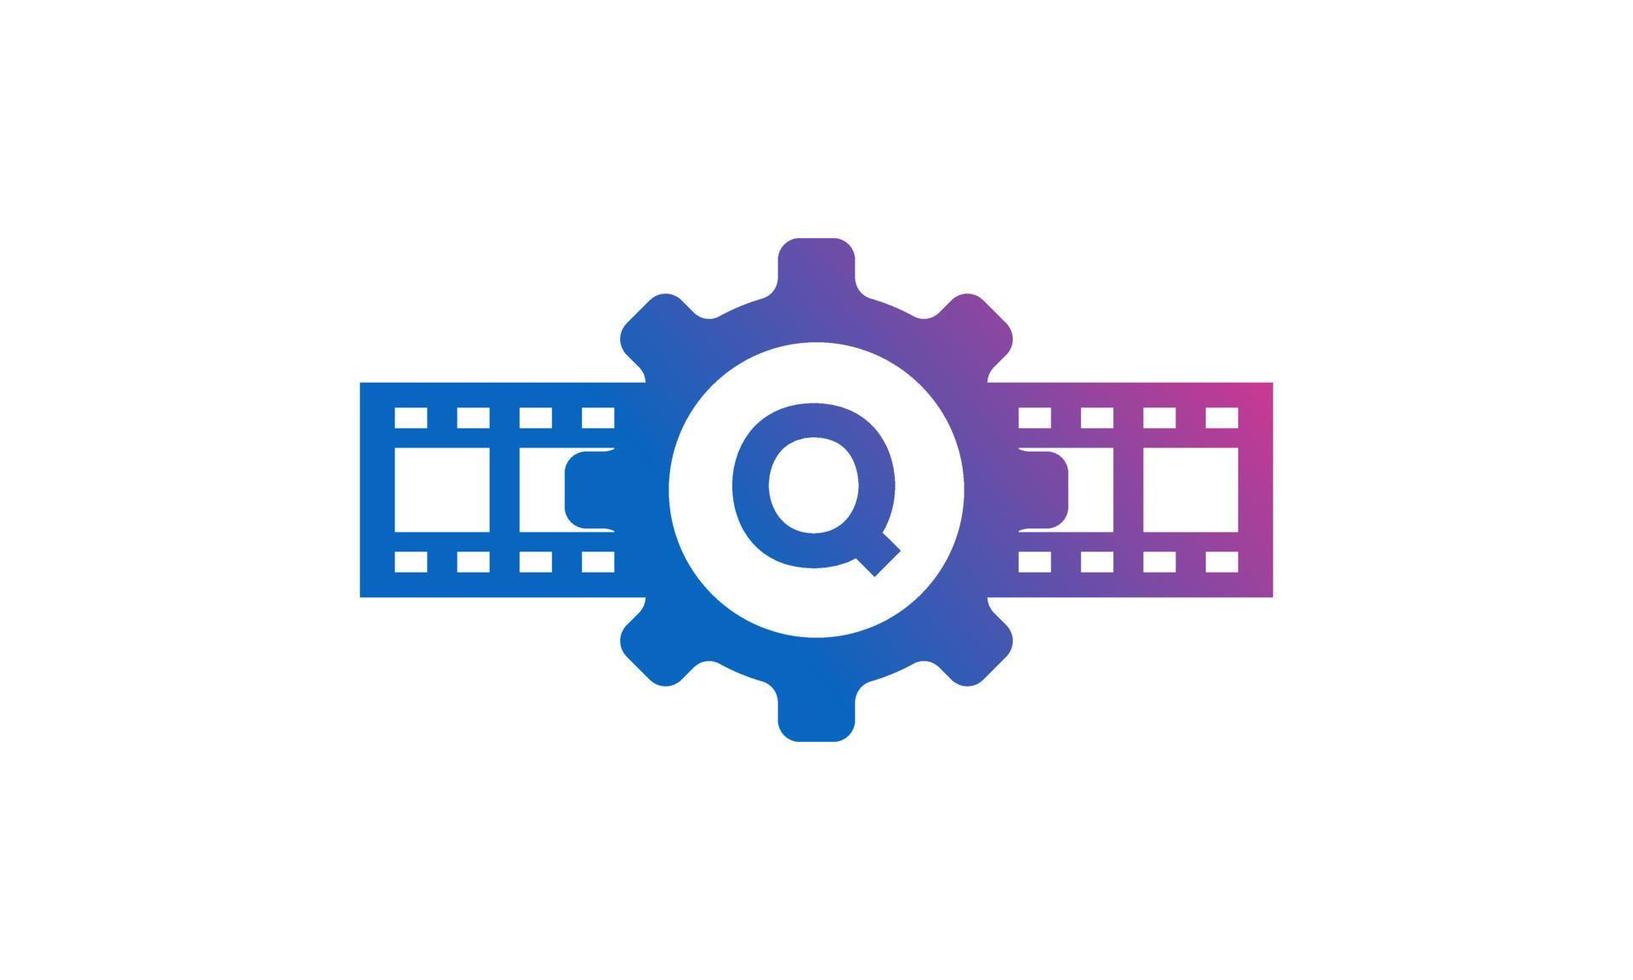 letra inicial q engranaje rueda dentada con rayas de carrete tira de película para película cine producción estudio logotipo inspiración vector